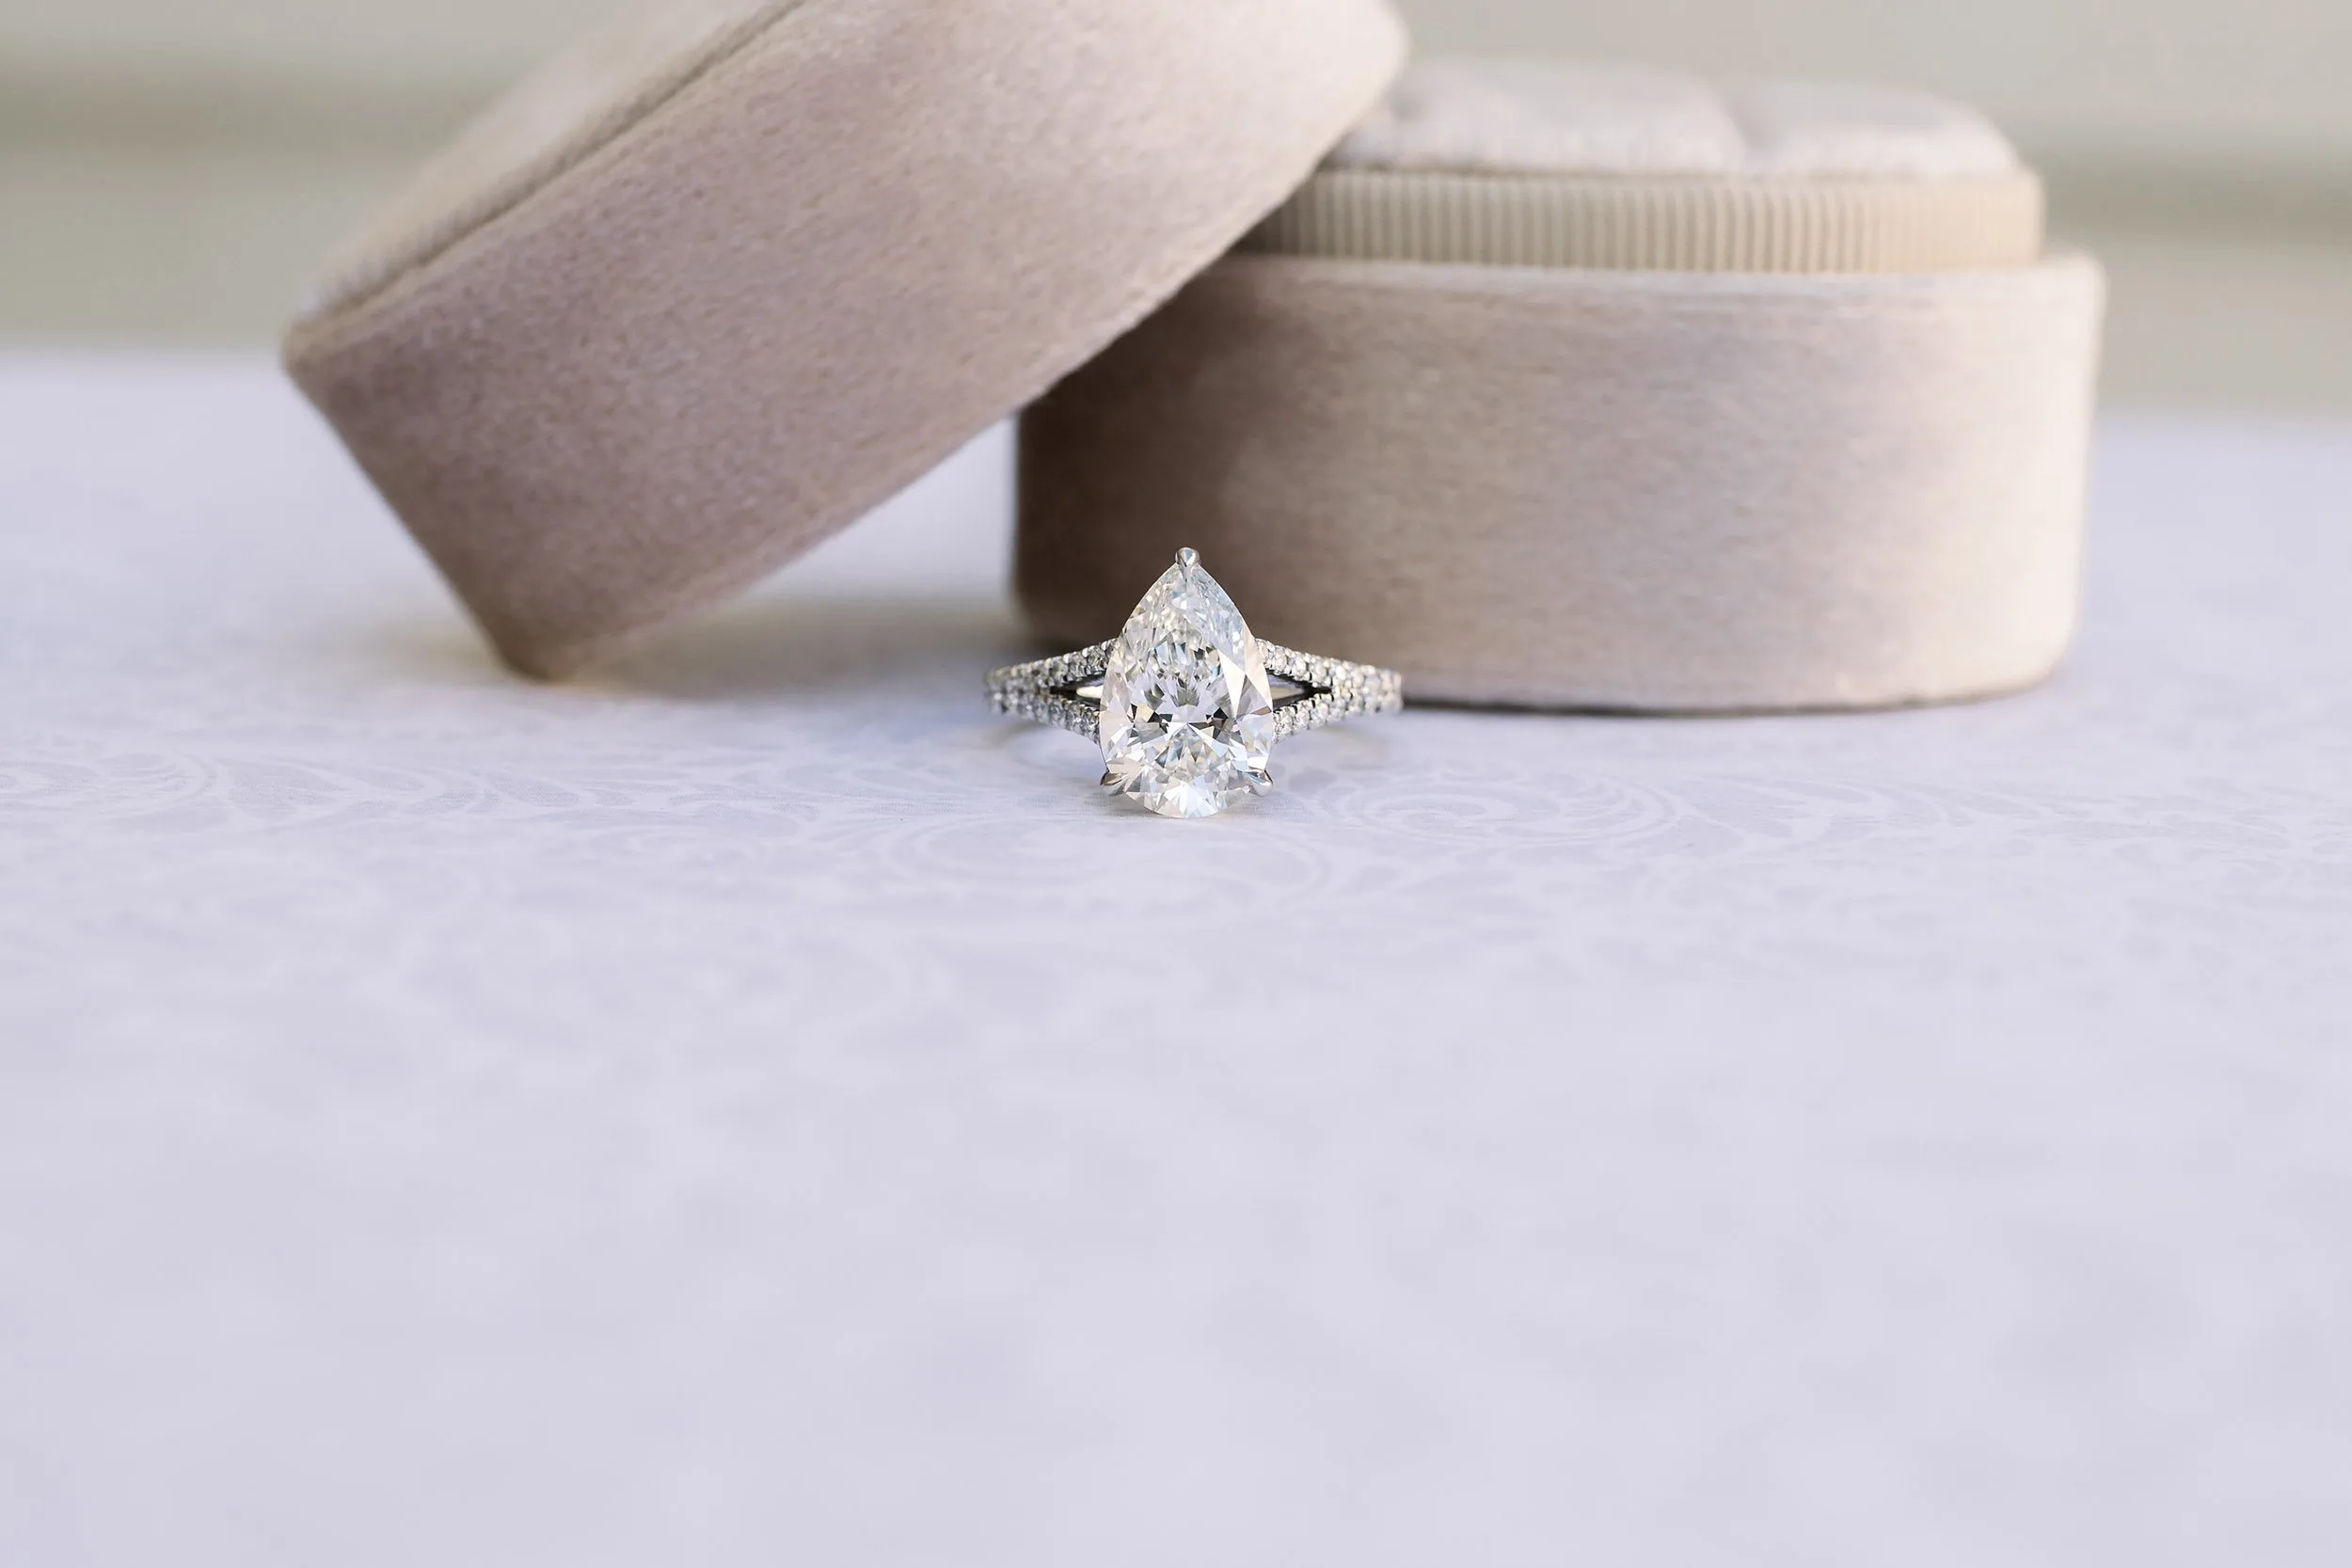 DIAMOND CONCIERGE PROCESS Six Steps to Create Stunning Custom Jewelry